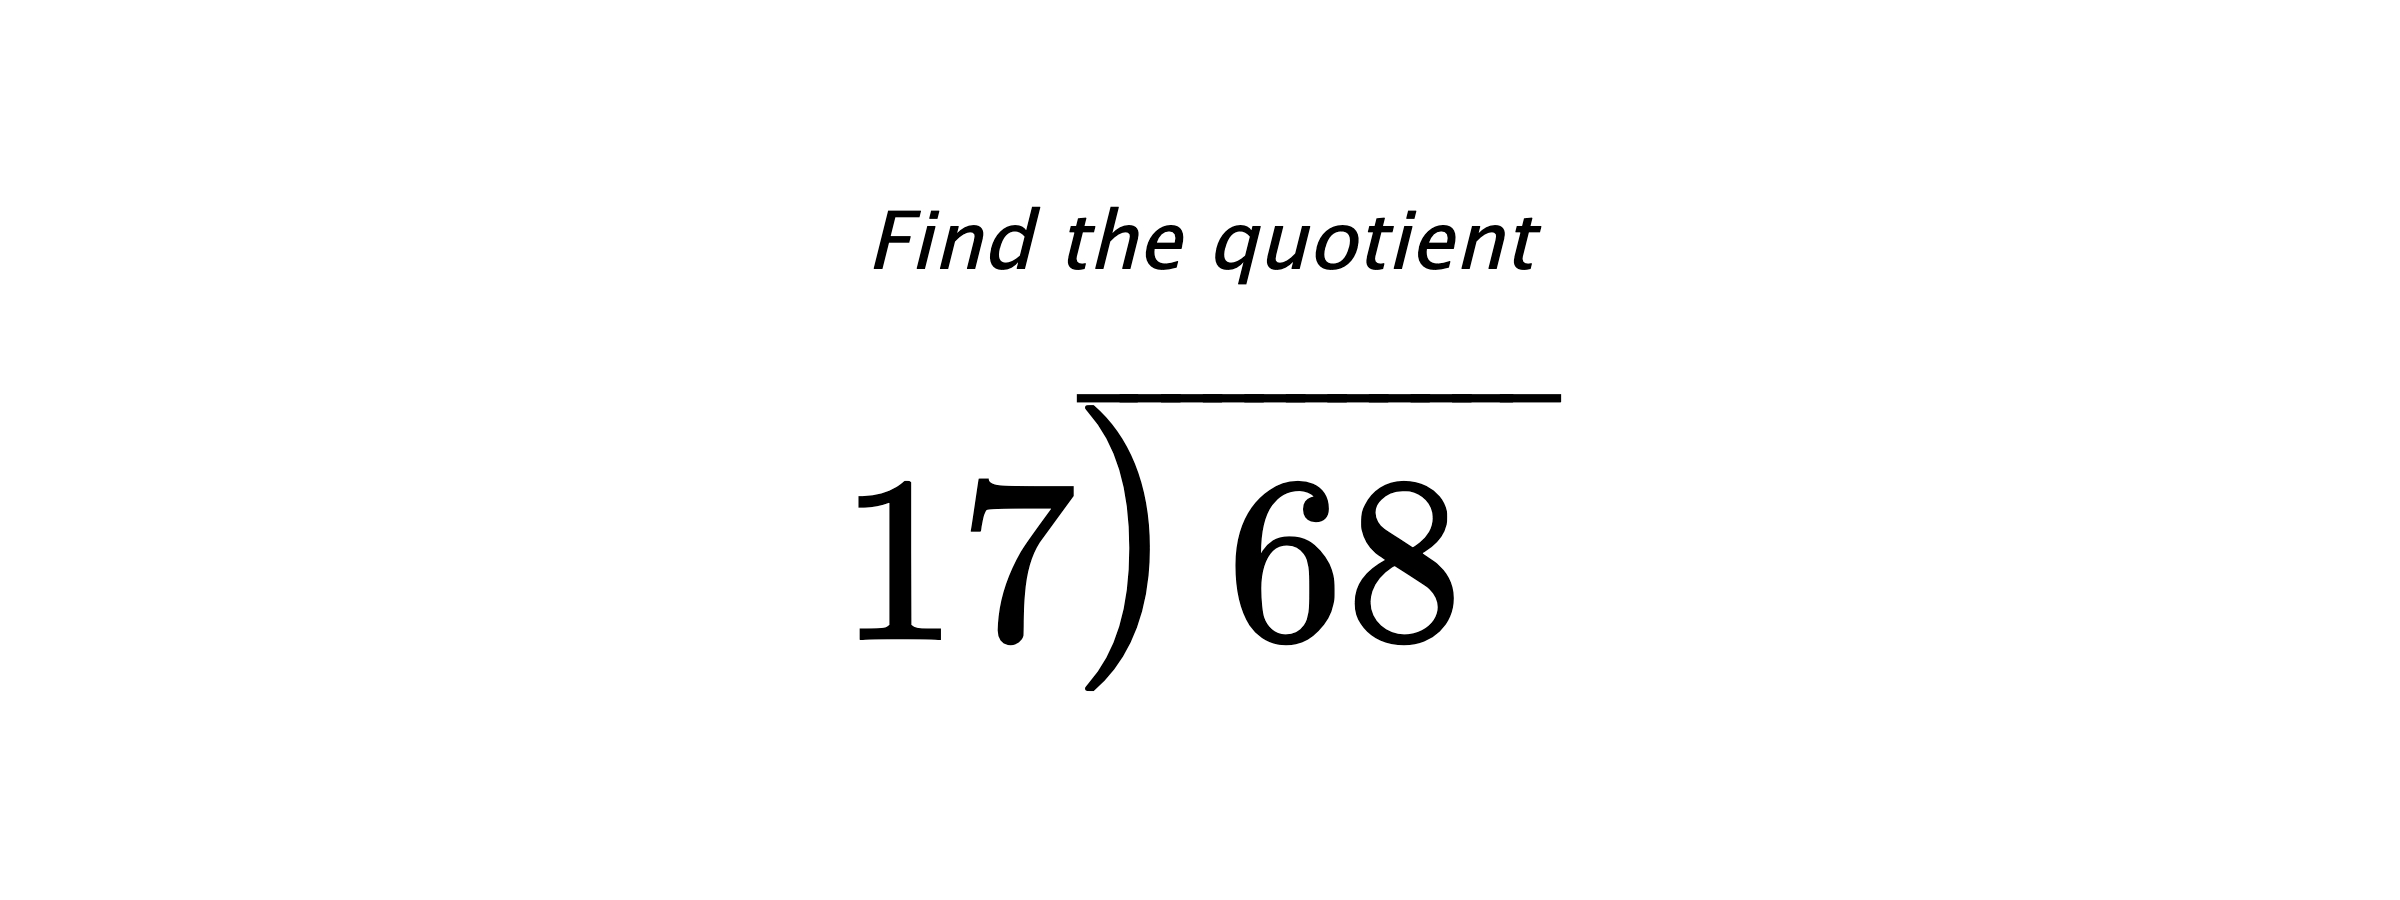 Find the quotient $ 17{\overline{\smash{\raise.3ex\hbox{$\big)$}}\,68\phantom{)}}} $